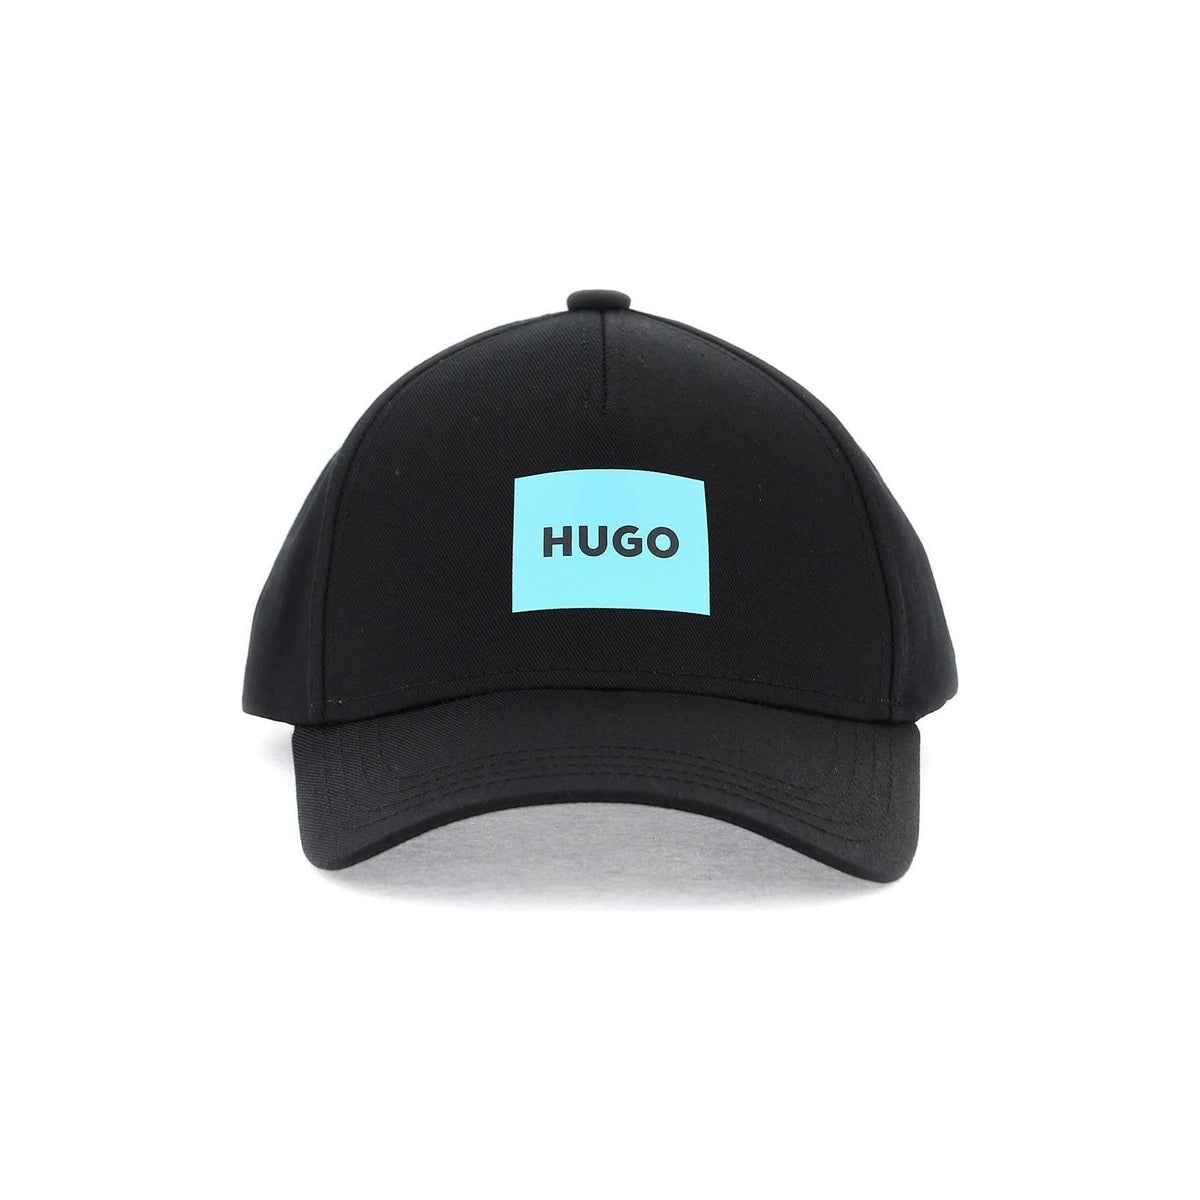 HUGO - Black Logo Cotton Baseball Cap - JOHN JULIA